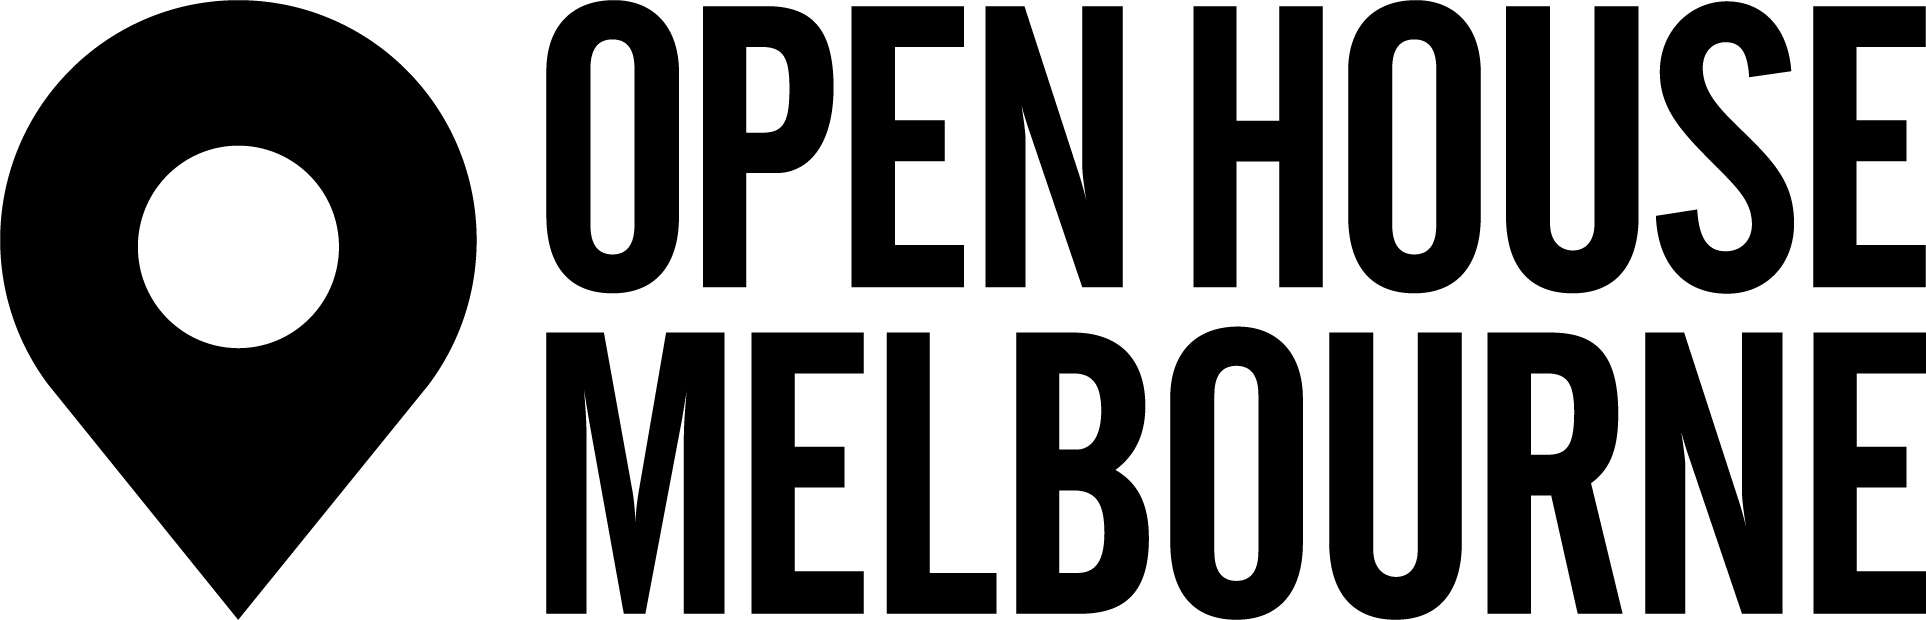 open house melbourne